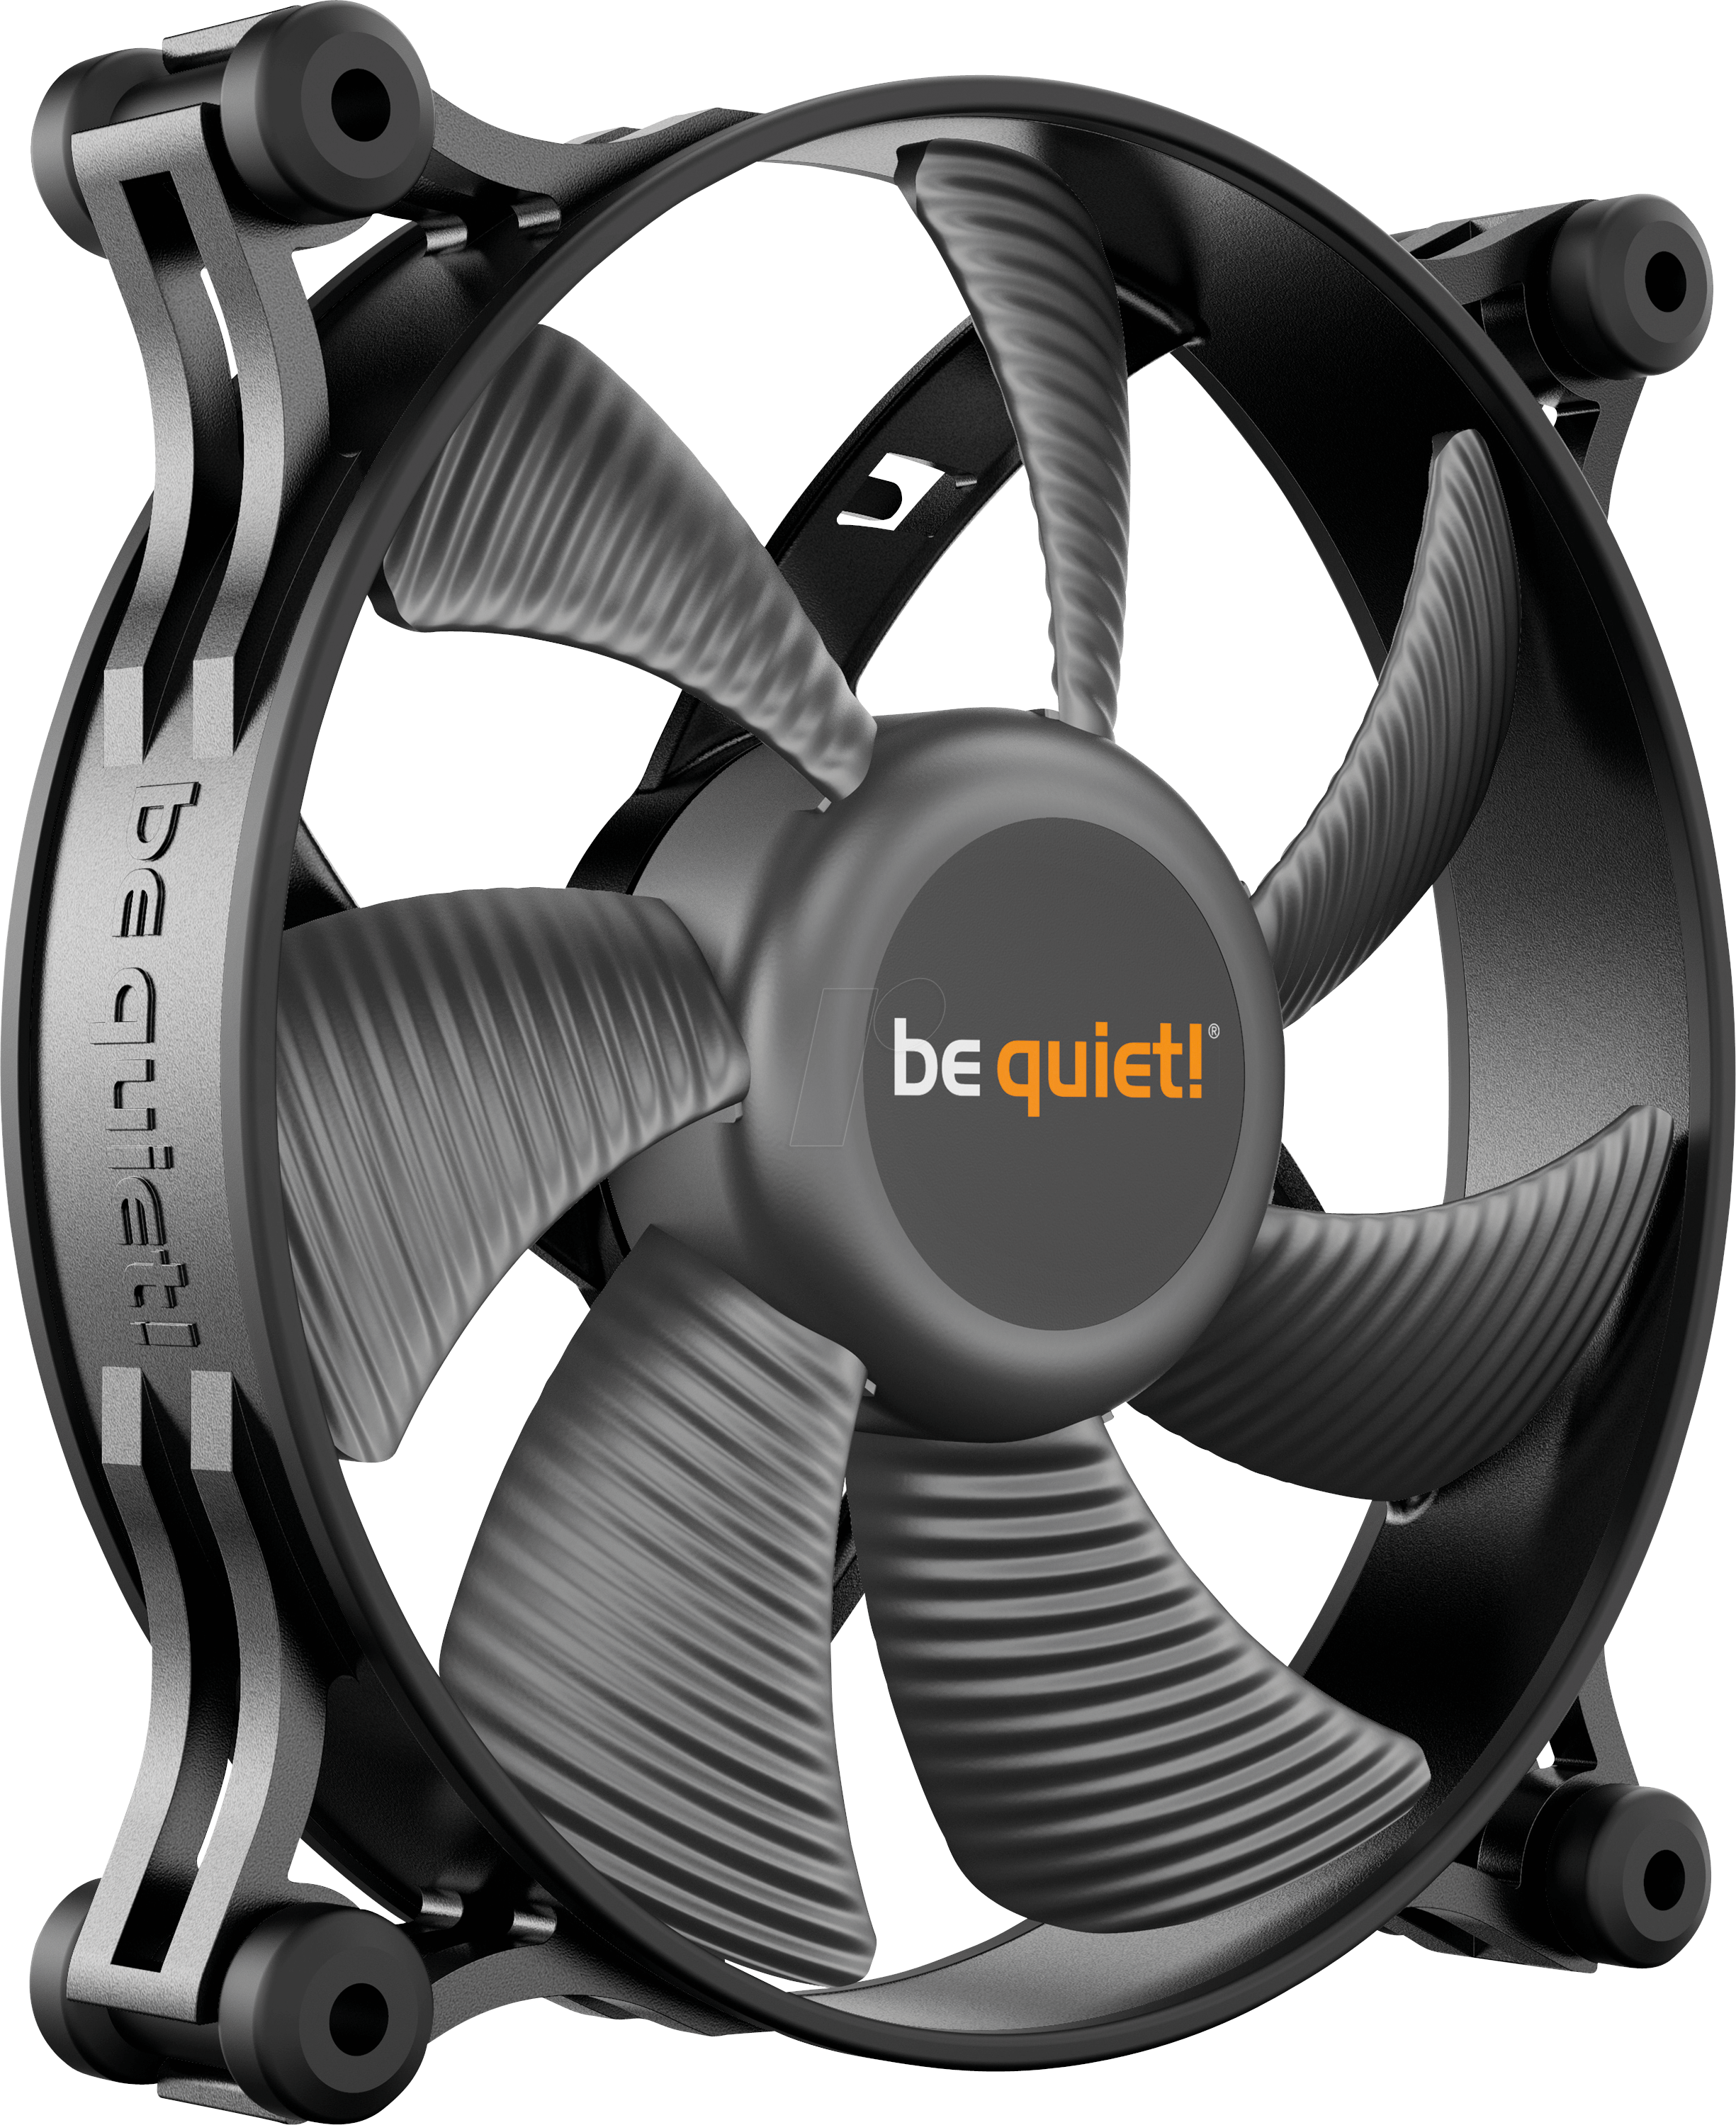 BQT BL085 - be quiet! Shadow Wings 2 PWM, 120mm